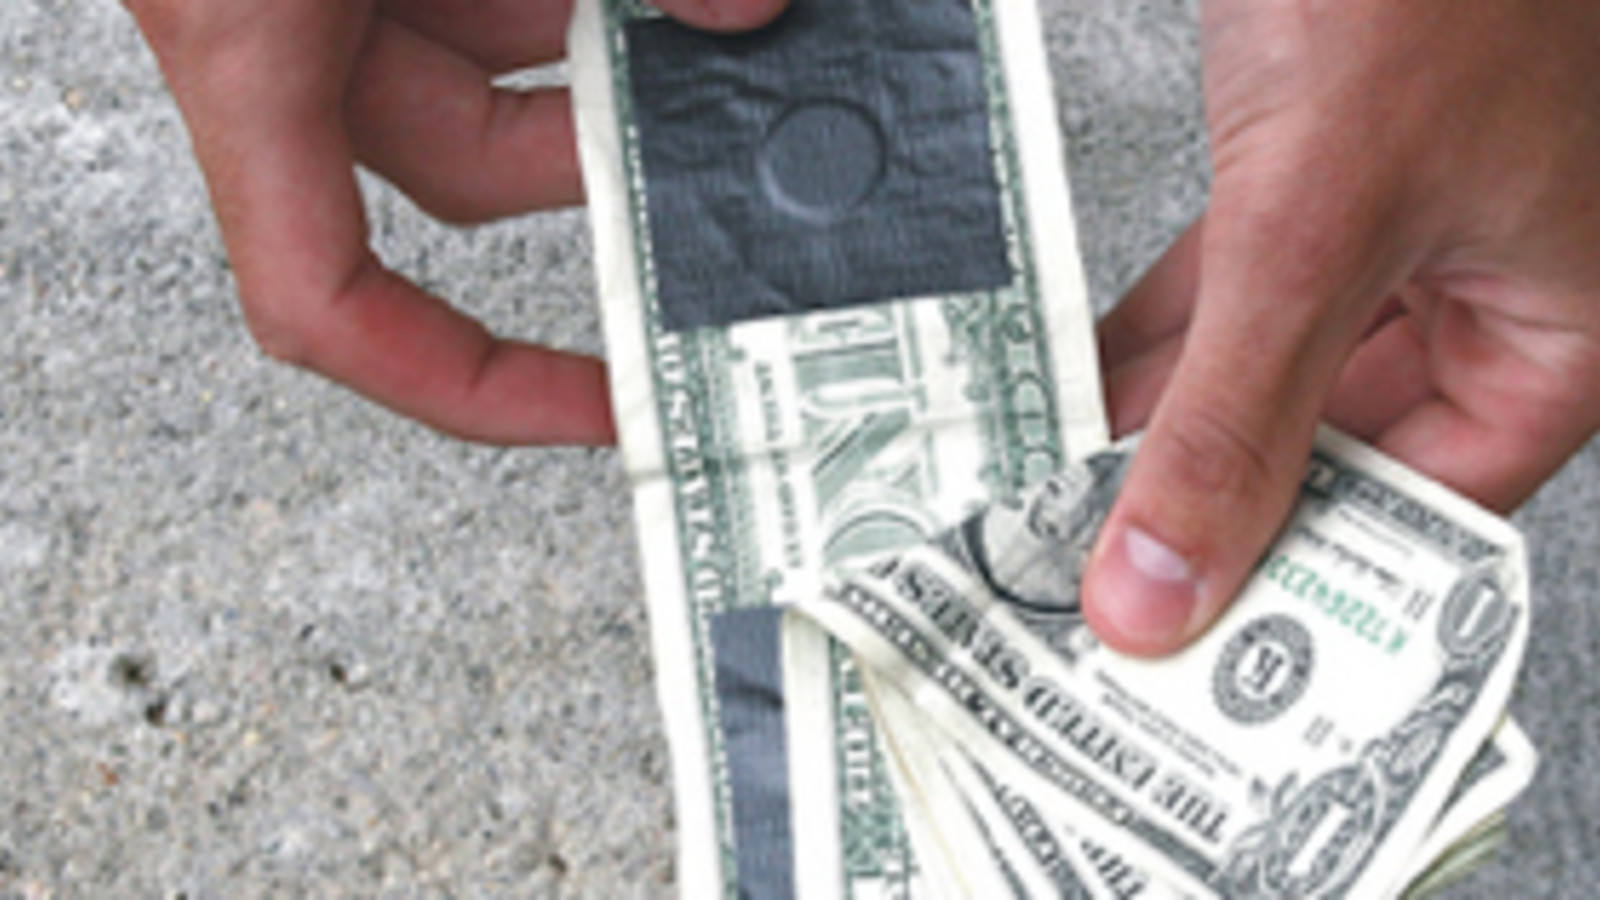 Best ideas about DIY Money Clip
. Save or Pin DIY Dollar Bill Money Clip Now.